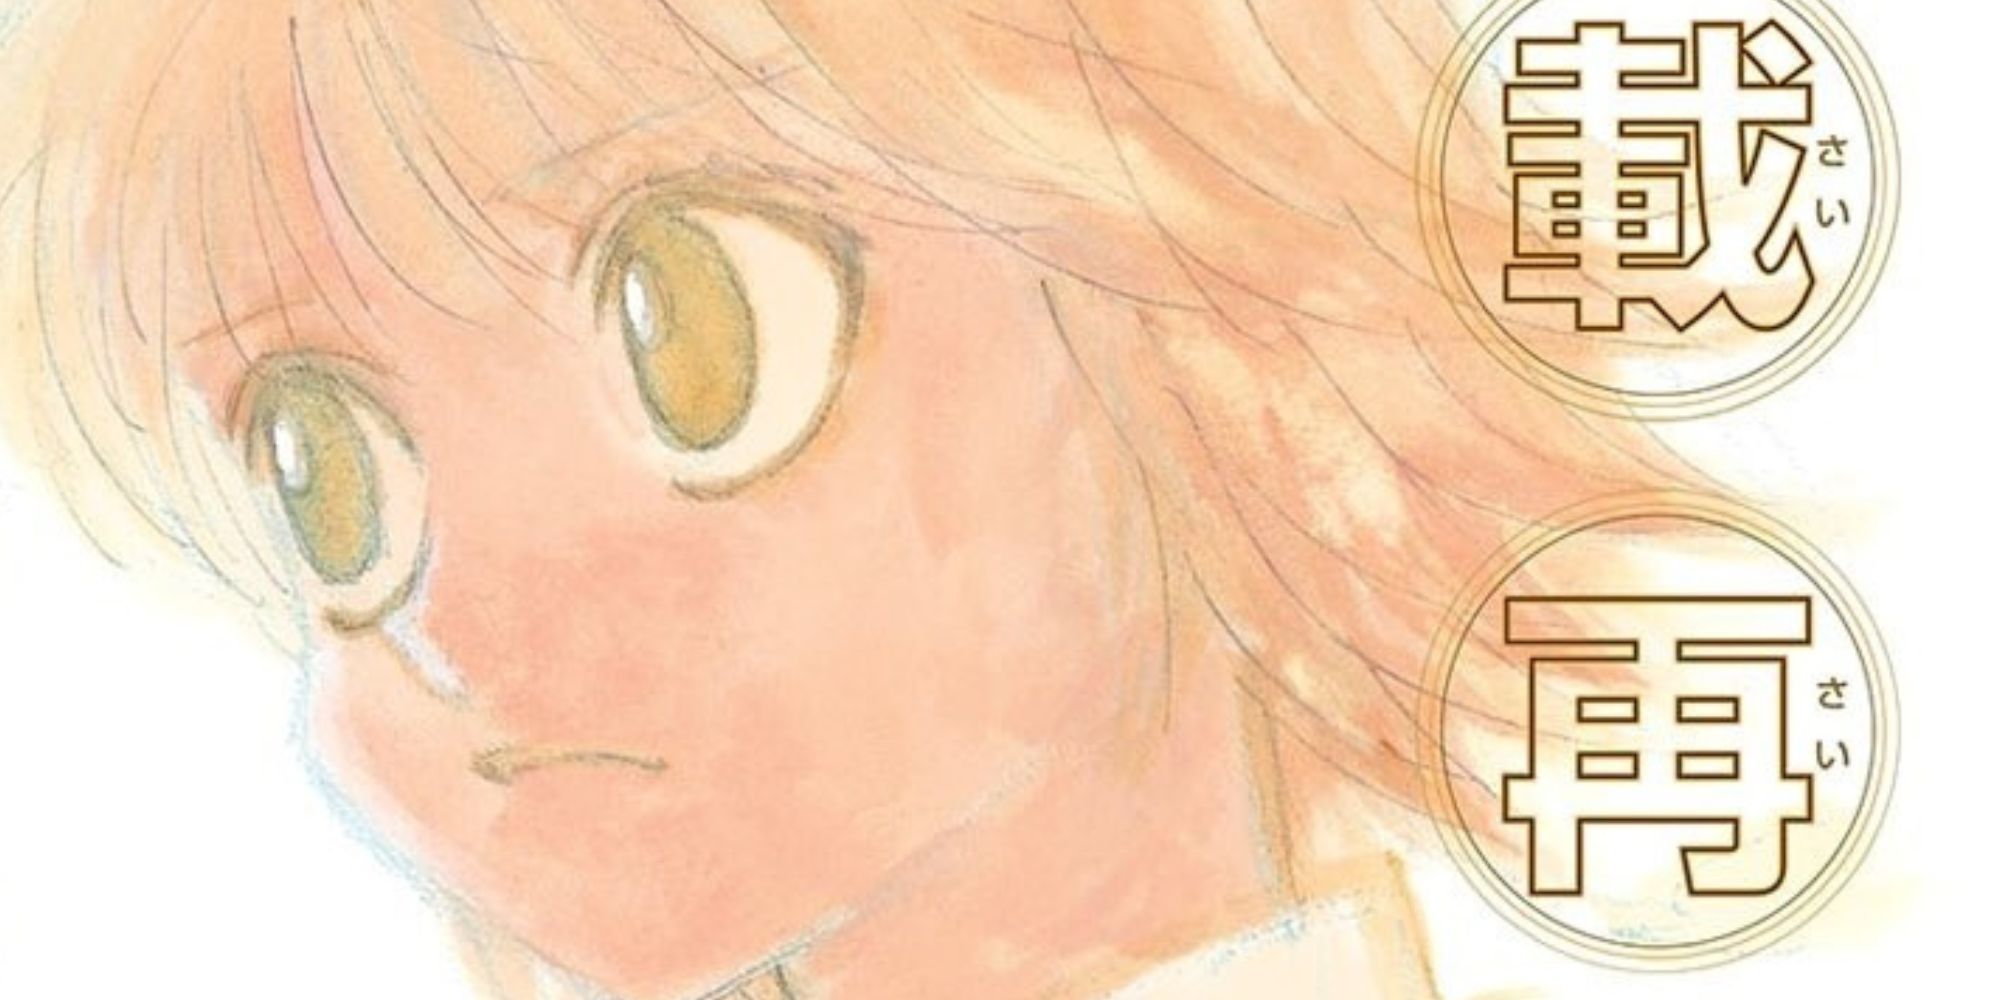 Hunter x Hunter Creator Yoshihiro Togashi Teases Manga's Return